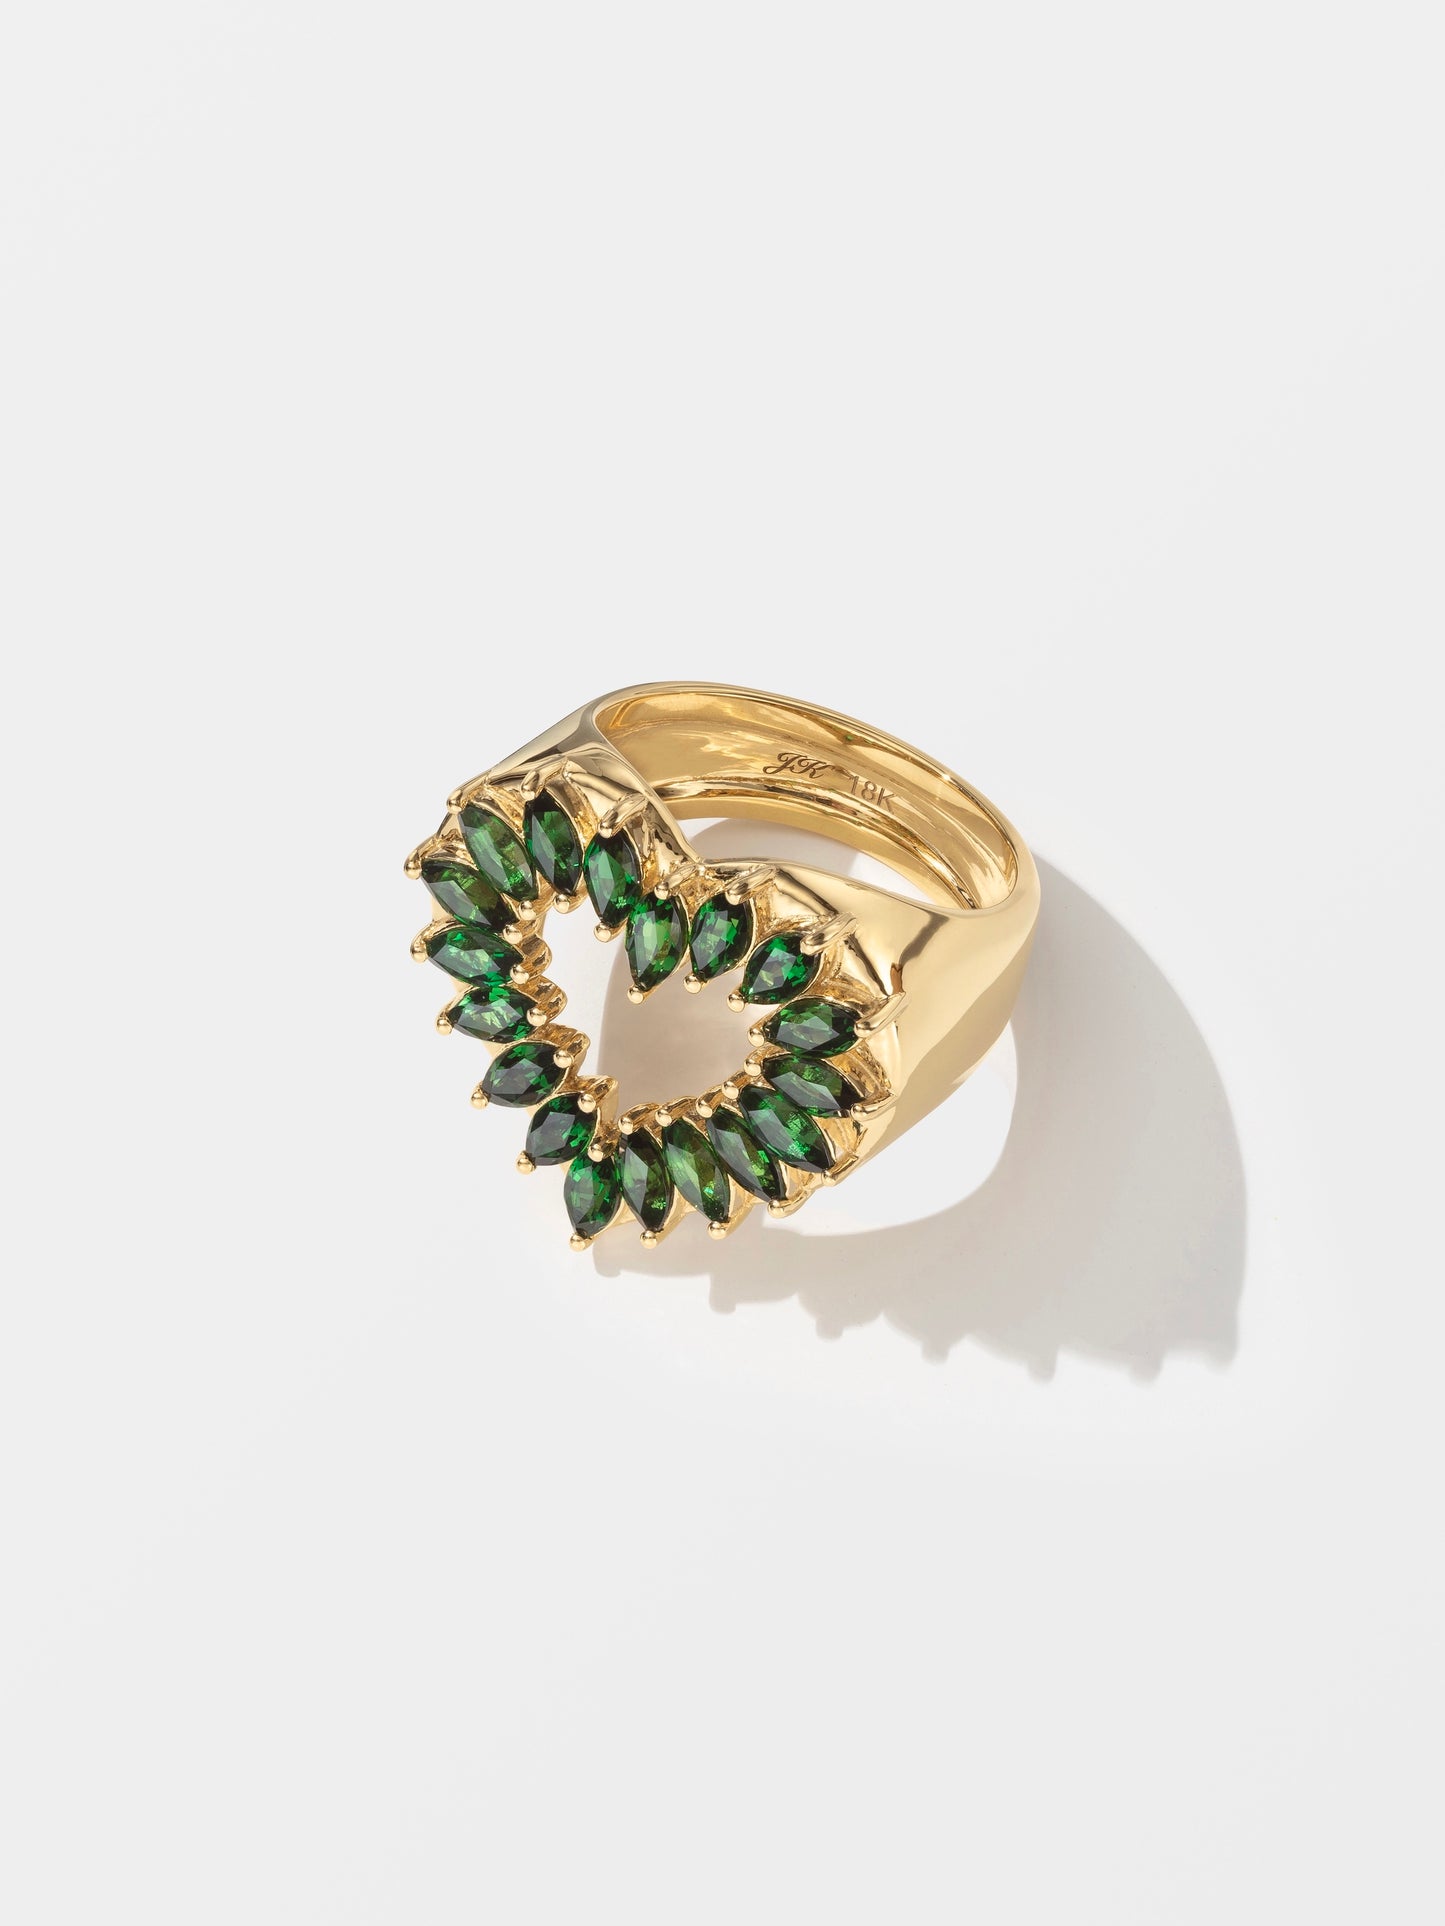 Juliette Kor Jewelry Hera ring with chrome tourmalines